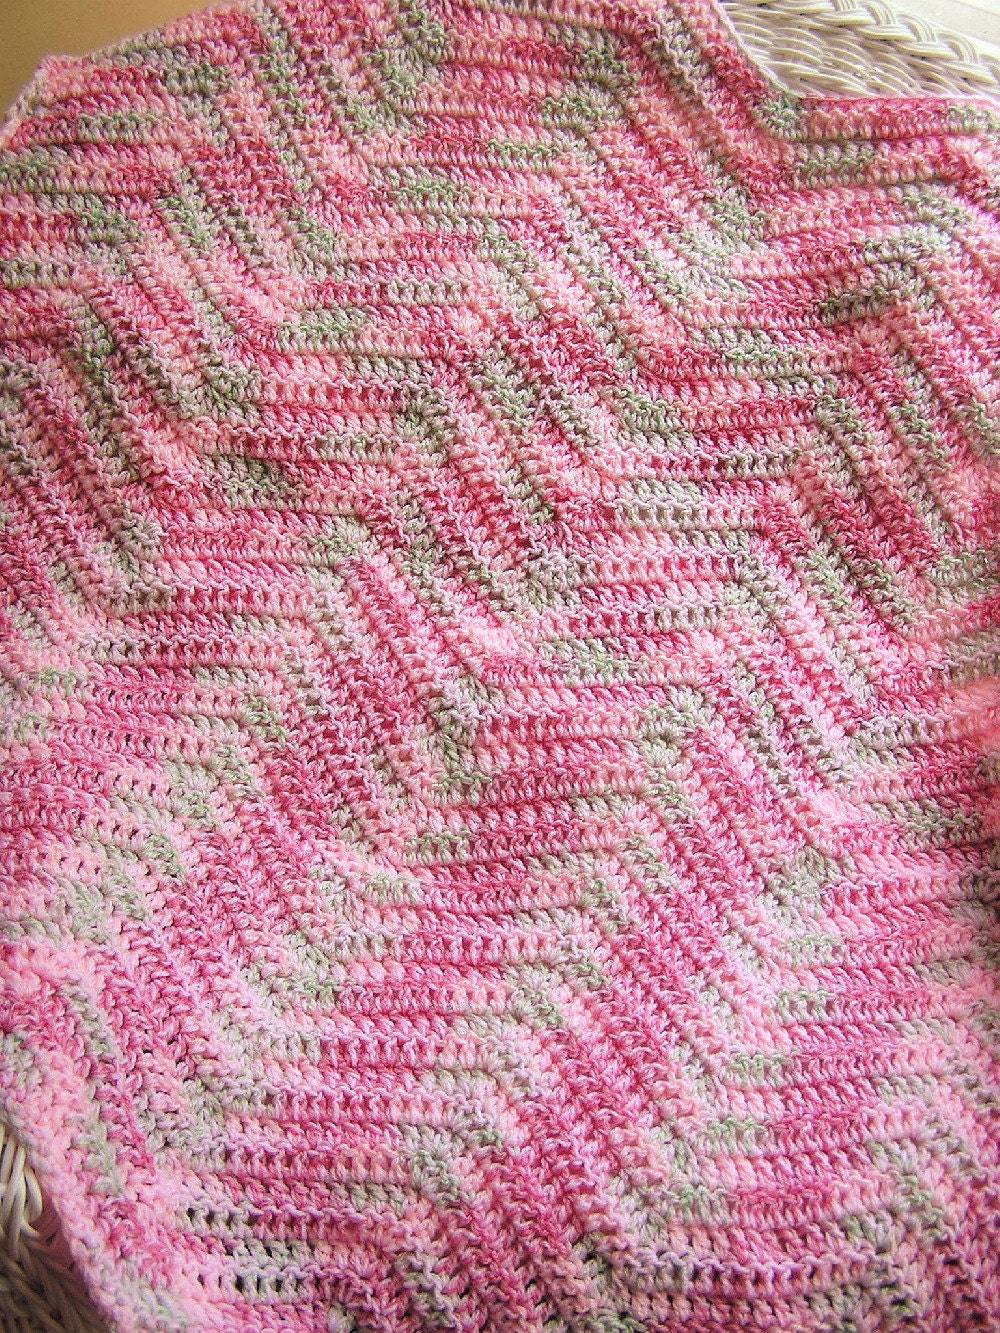 ripple crochet afghan